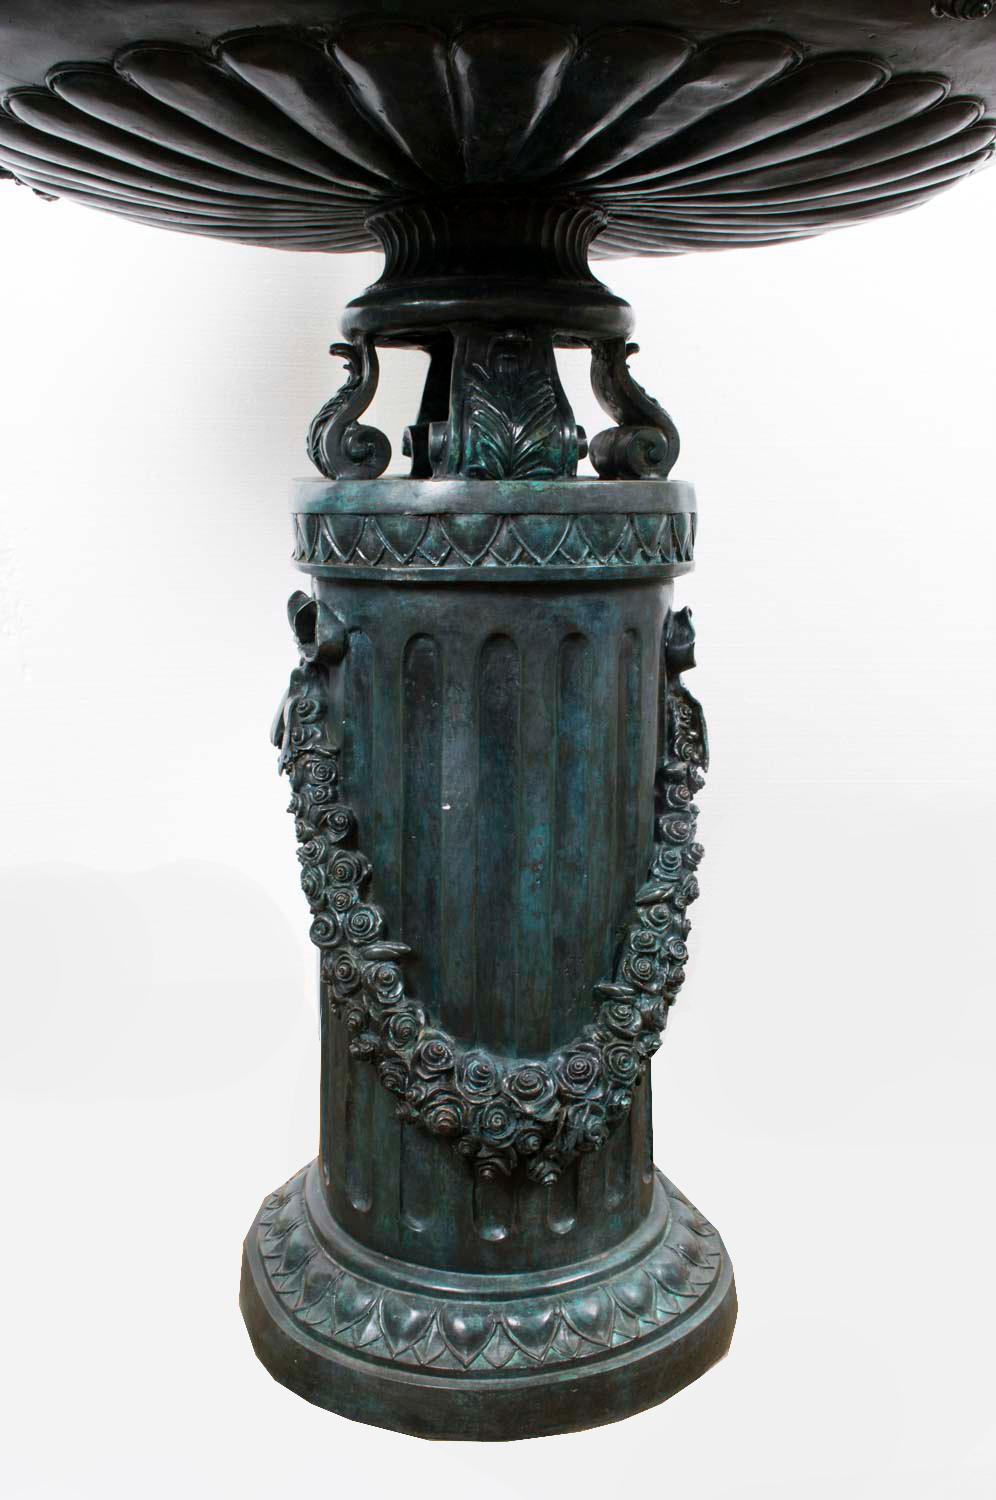 Vintage Large Bronze Urn Garden Fountain Bird Bath Jardiniere 20th C In Good Condition For Sale In London, GB